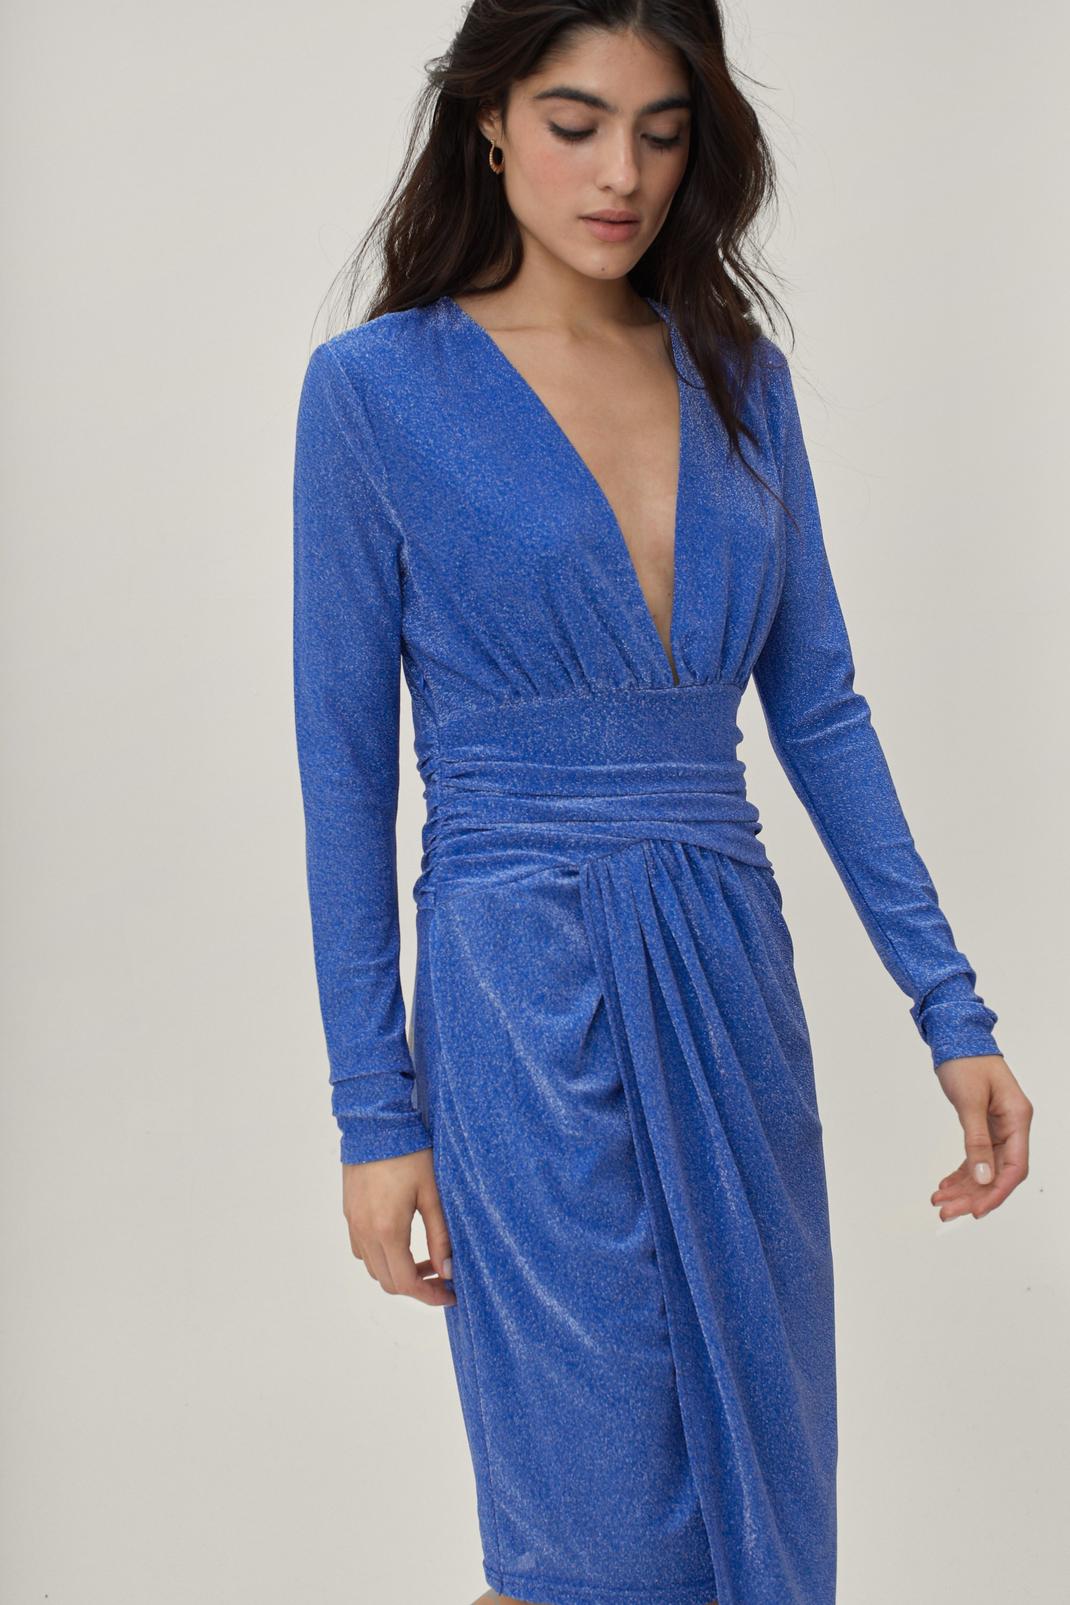 Asymmetric Hem Blue Prom Dress